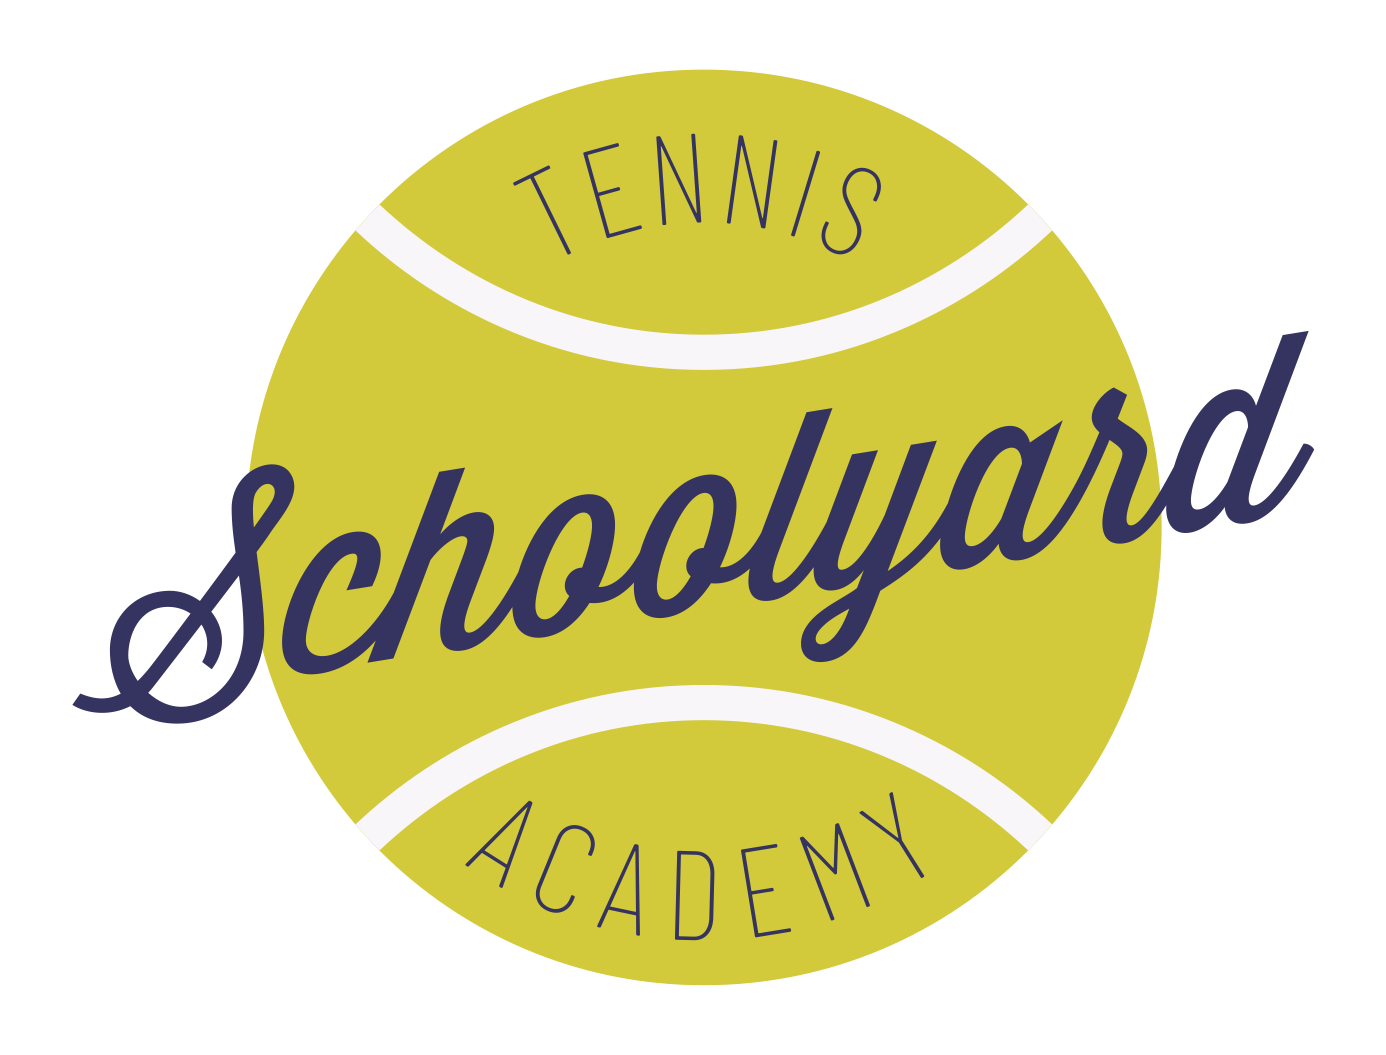 Image 1 of 3 of Schoolyard Tennis & Pickleball Academy court